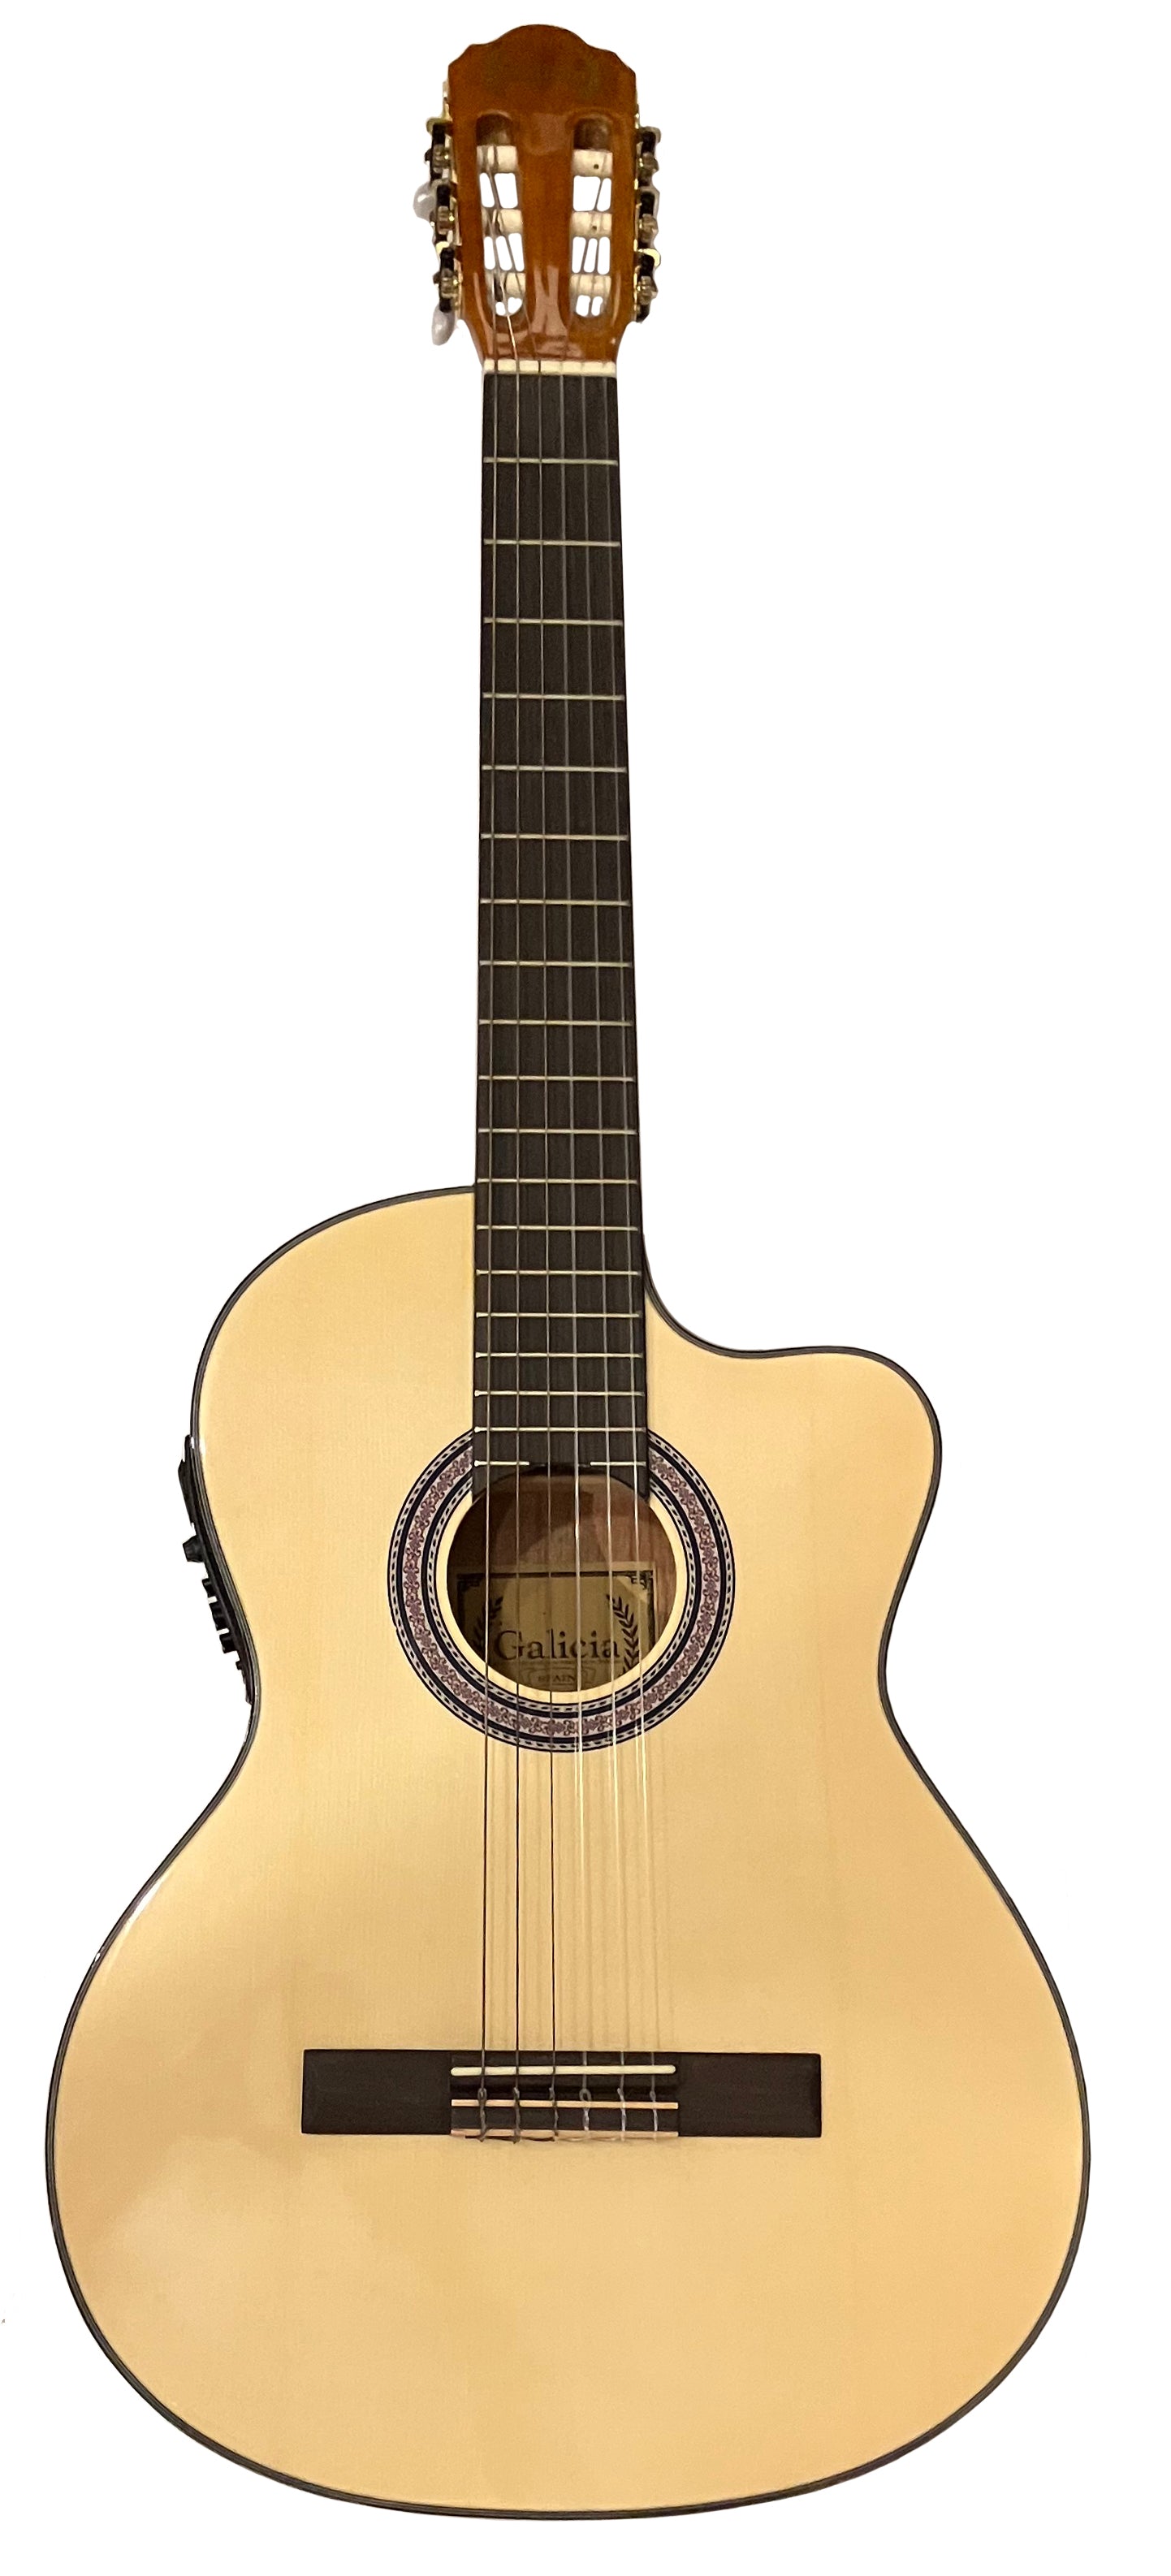 Galicia ESC-180CE 6-String Nylon 39" Cutaway Classical Guitar